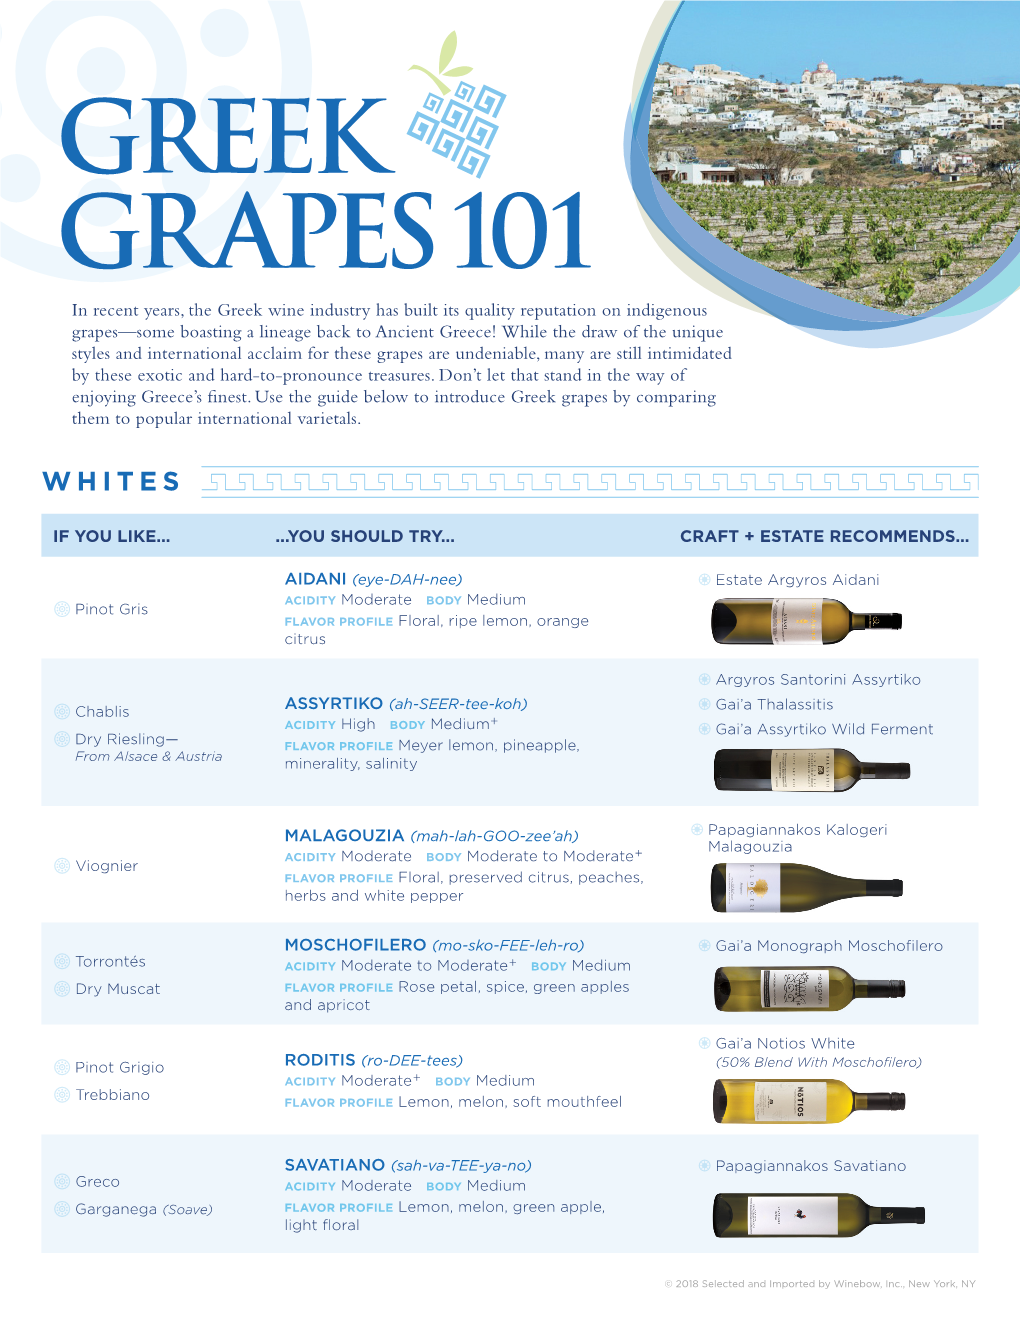 Greek Grapes by Comparing Them to Popular International Varietals